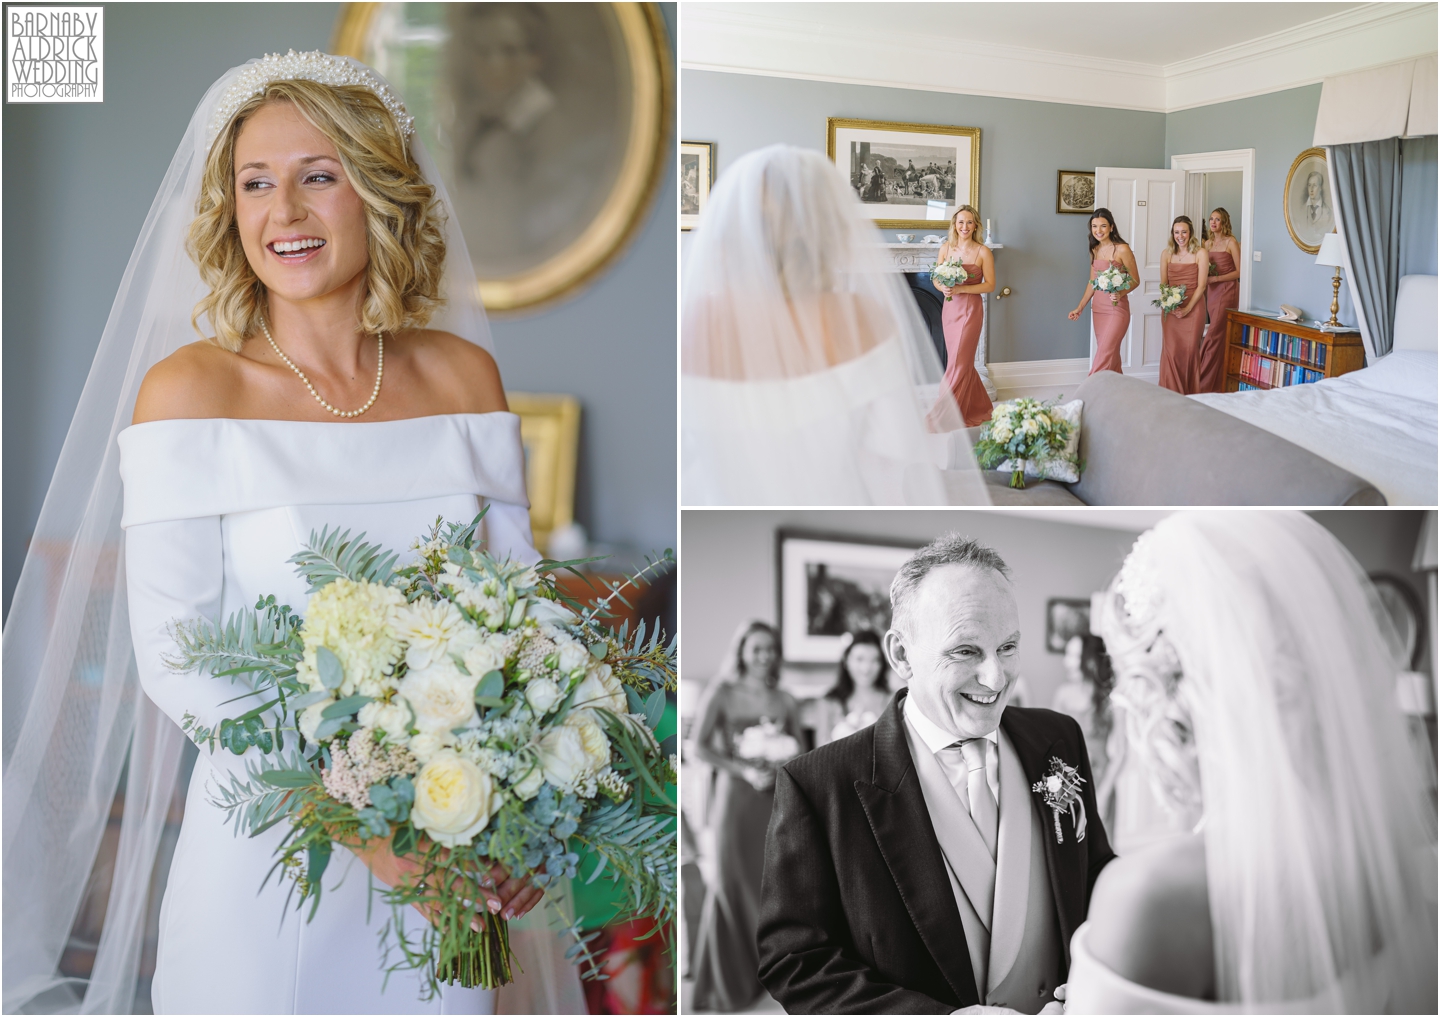 Birdsall House Wedding, Malton Wedding Photography, Yorkshire Wedding Venue, Birdsall House Wedding Photos, Birdsall House Wedding Photographer